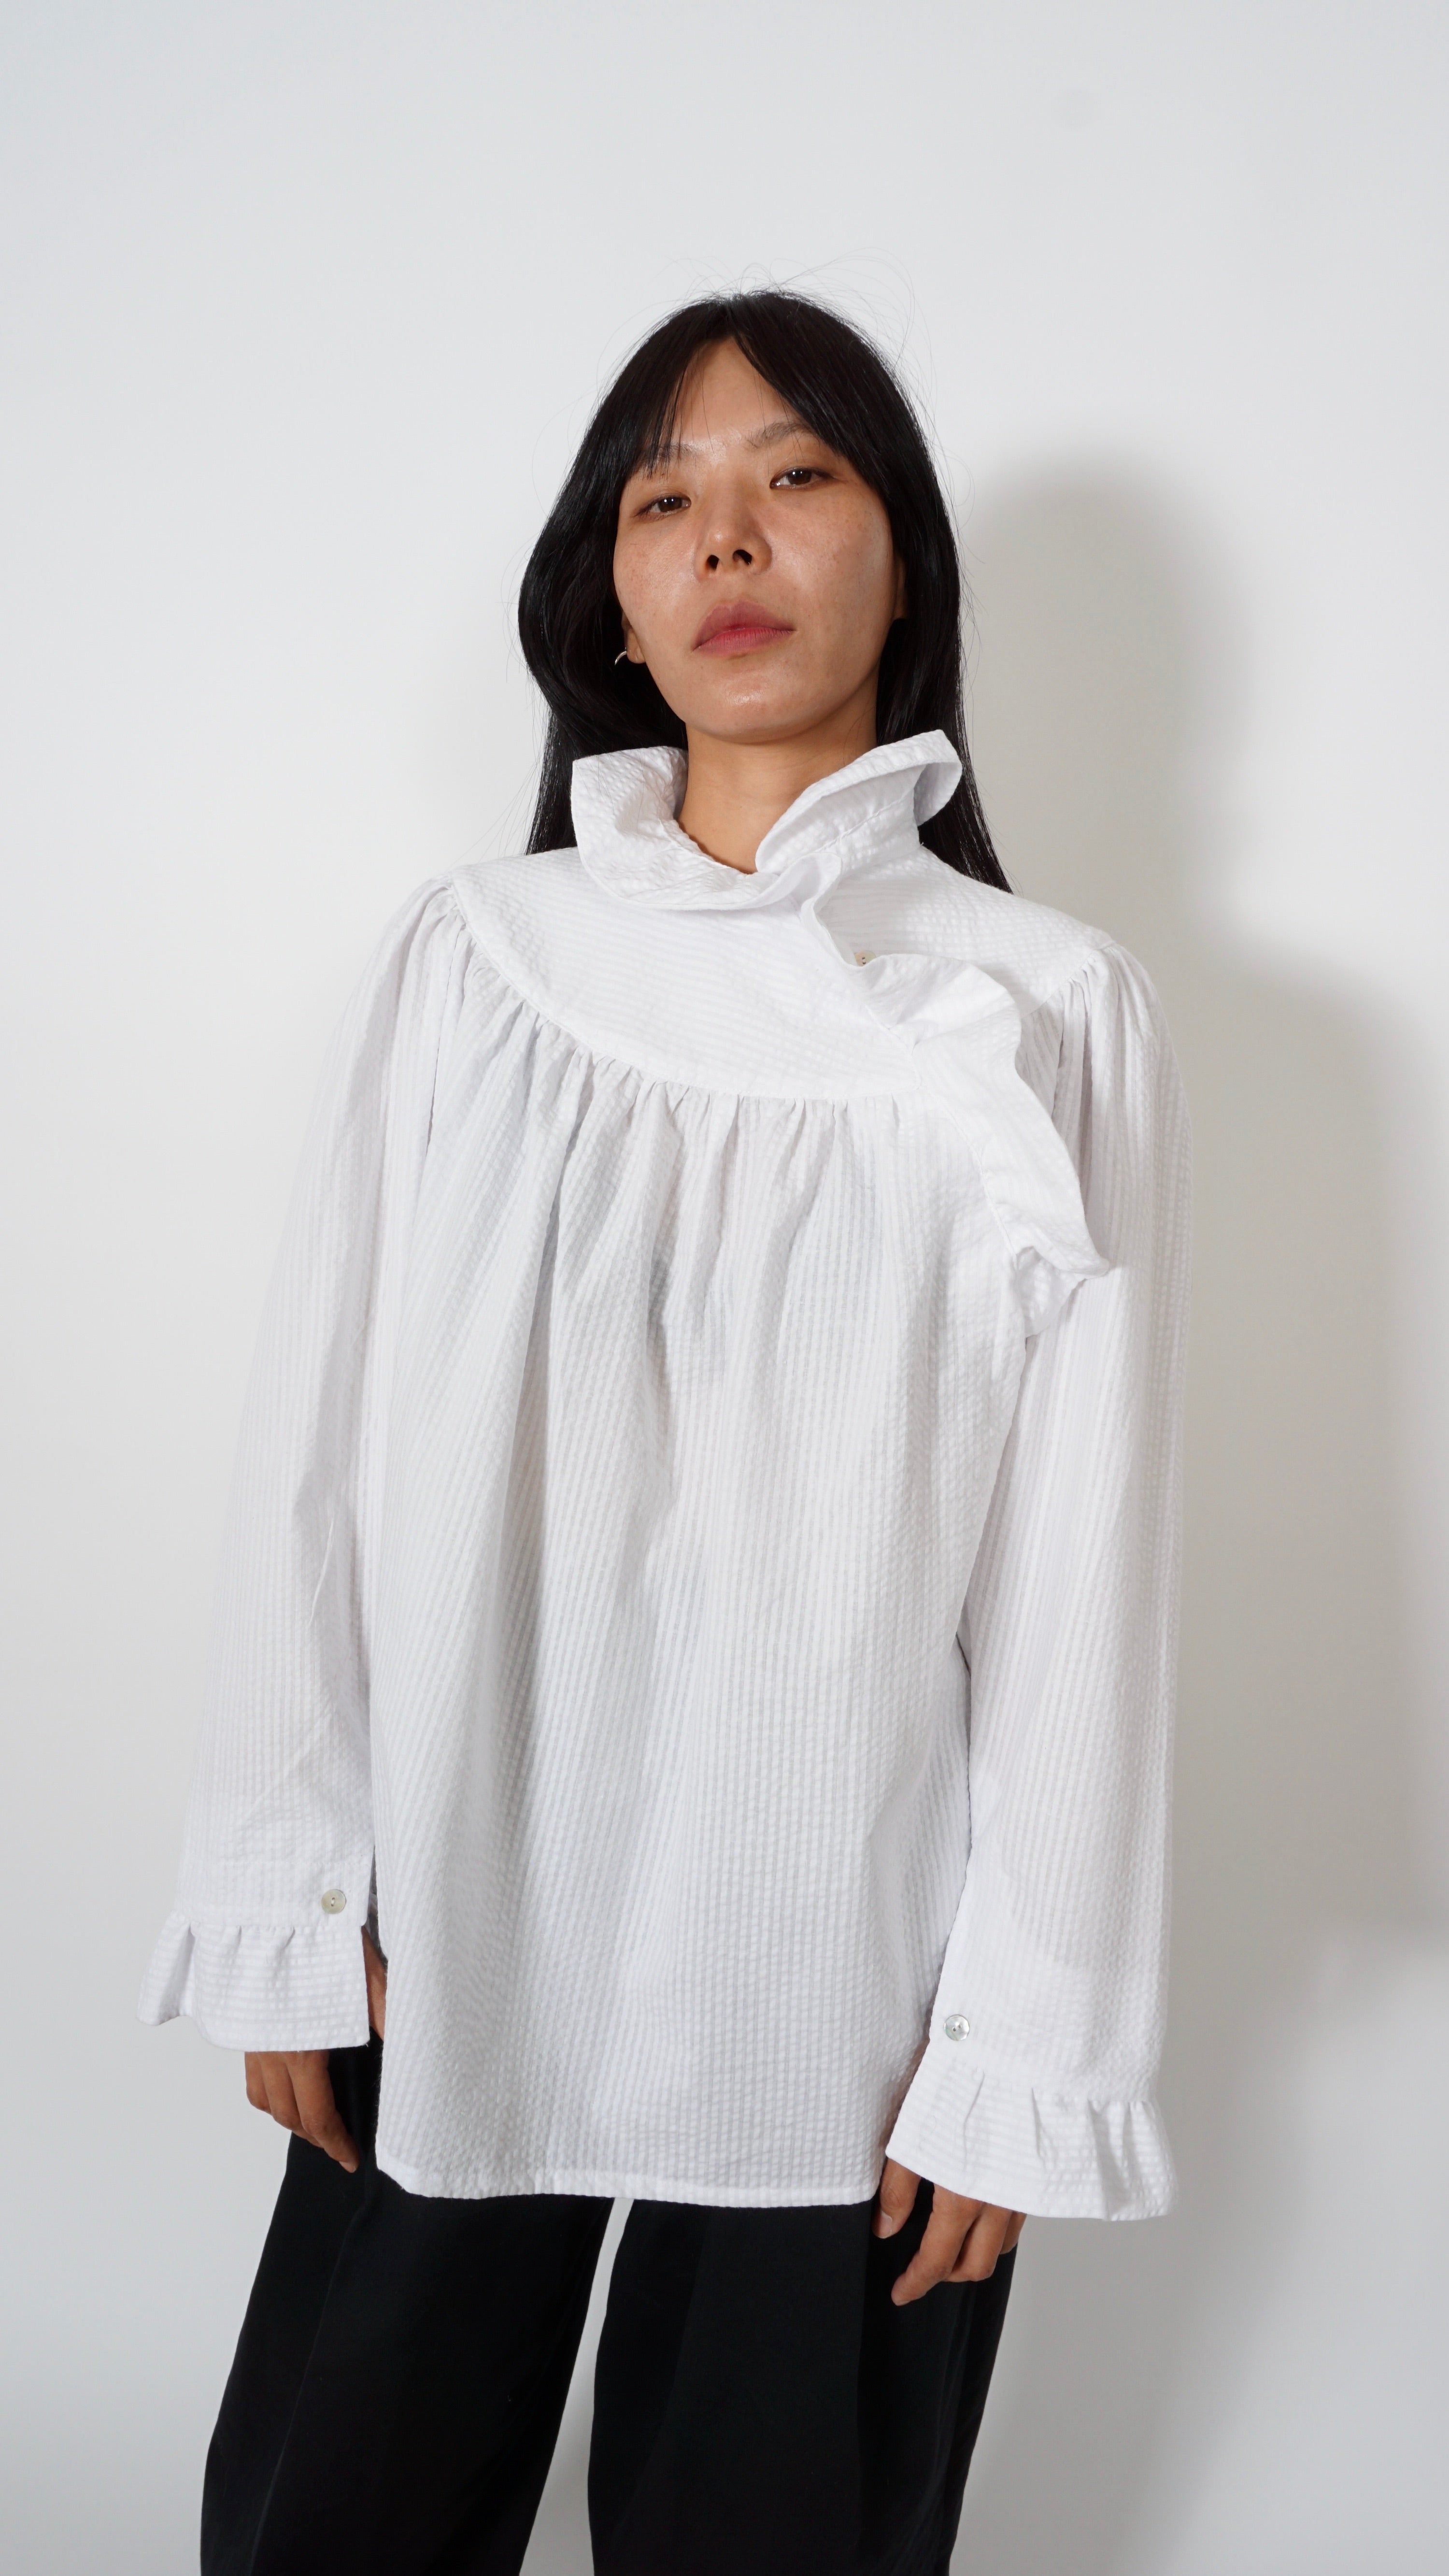 Cotton shirt by Sabine Poupinel